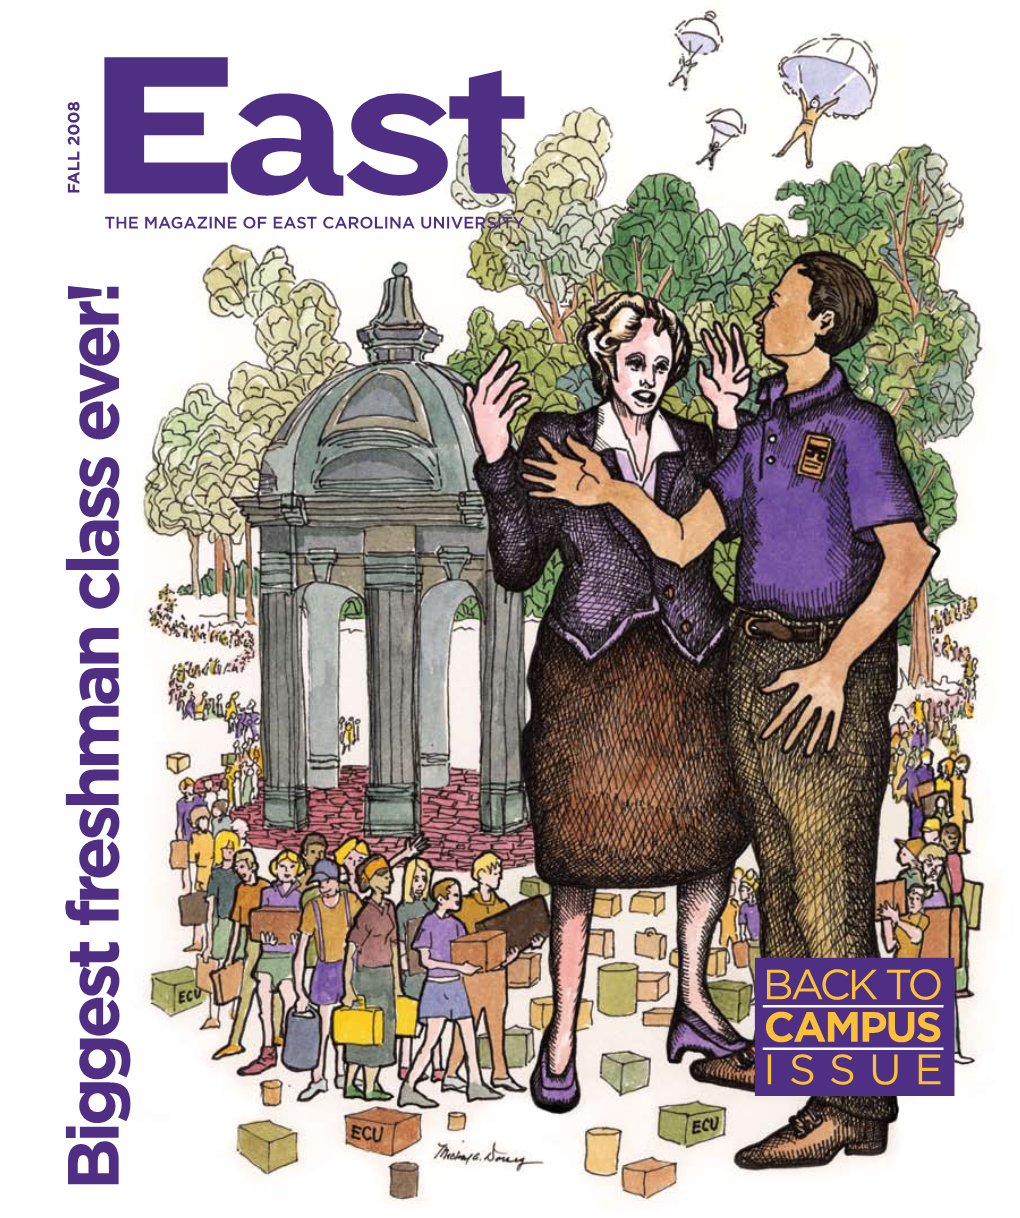 Biggest Freshman Class Ever! Class Freshman Biggest Viewfinder Fall 2008 Fall Eastthe Magazine of East Carolina University